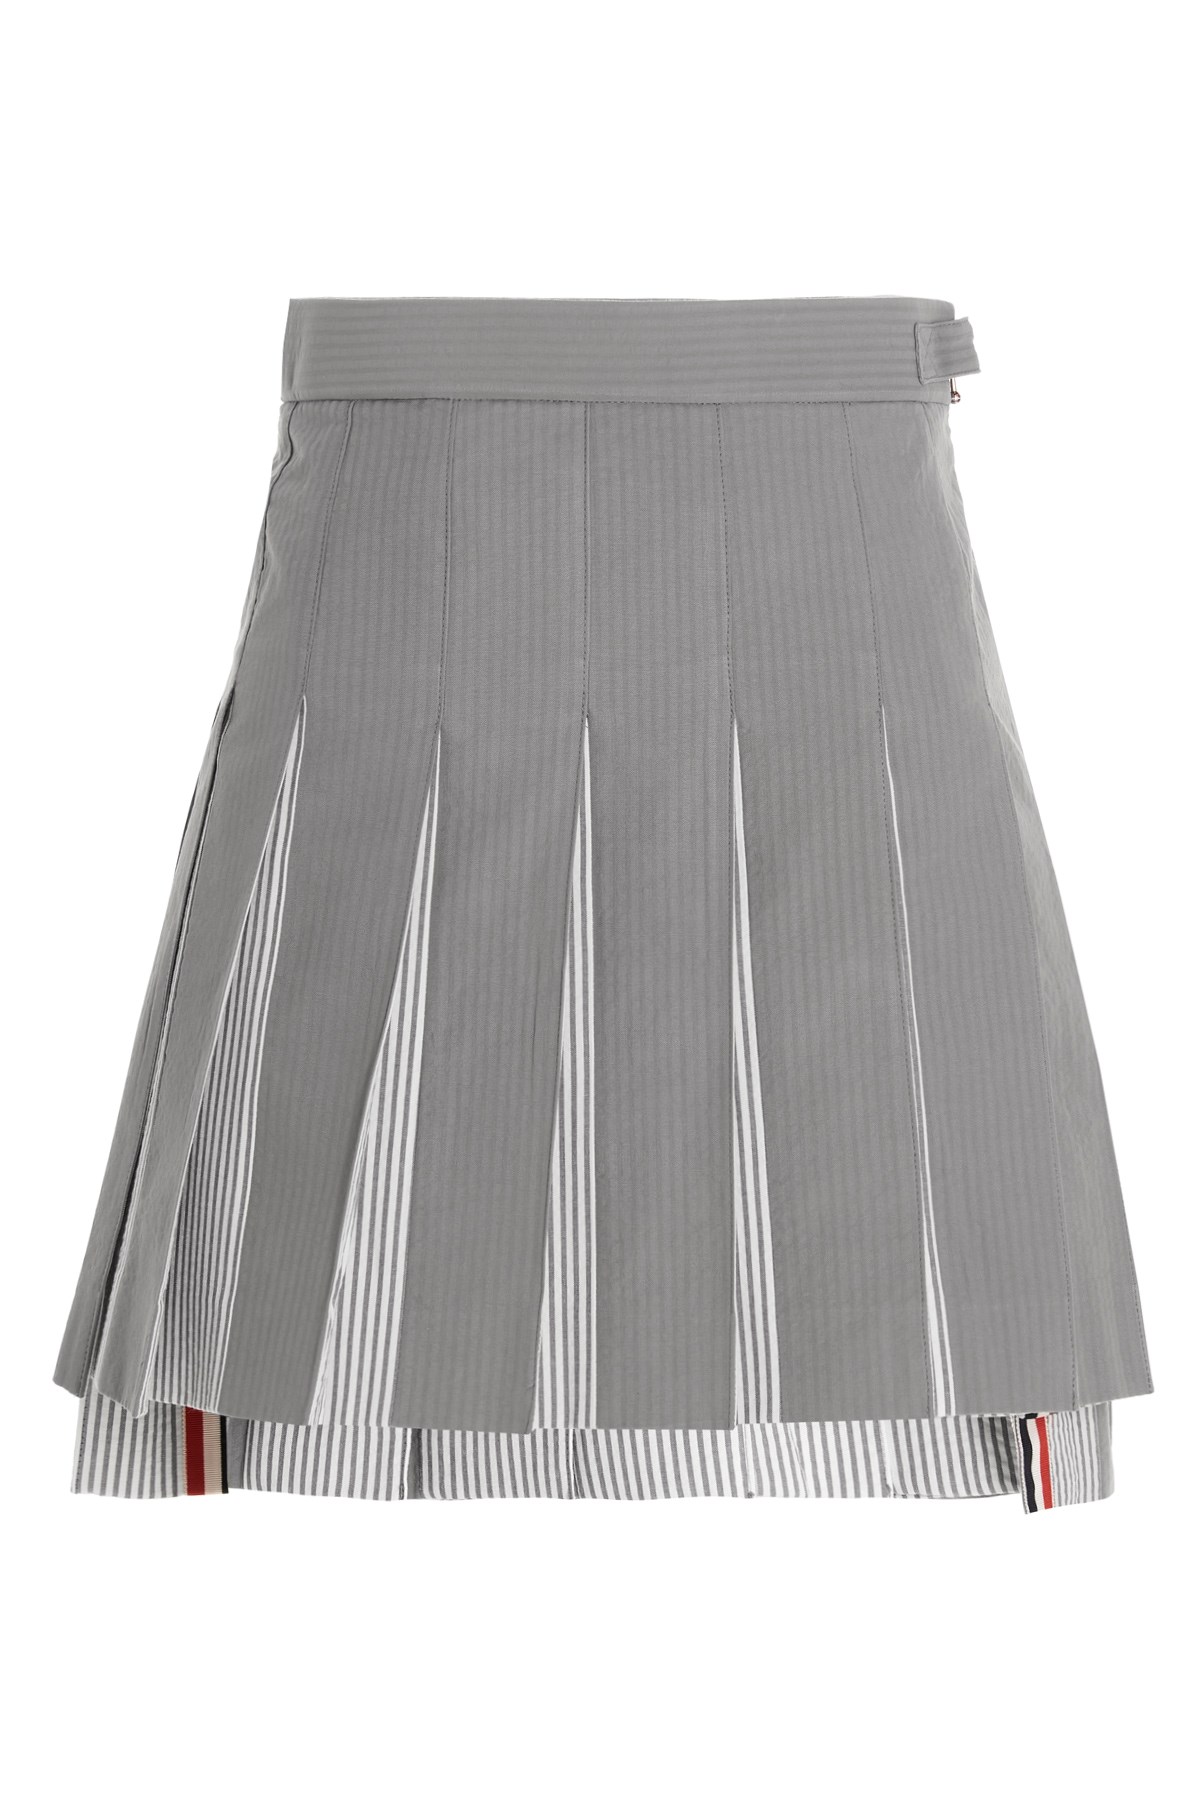 THOM BROWNE Striped Cotton Skirt